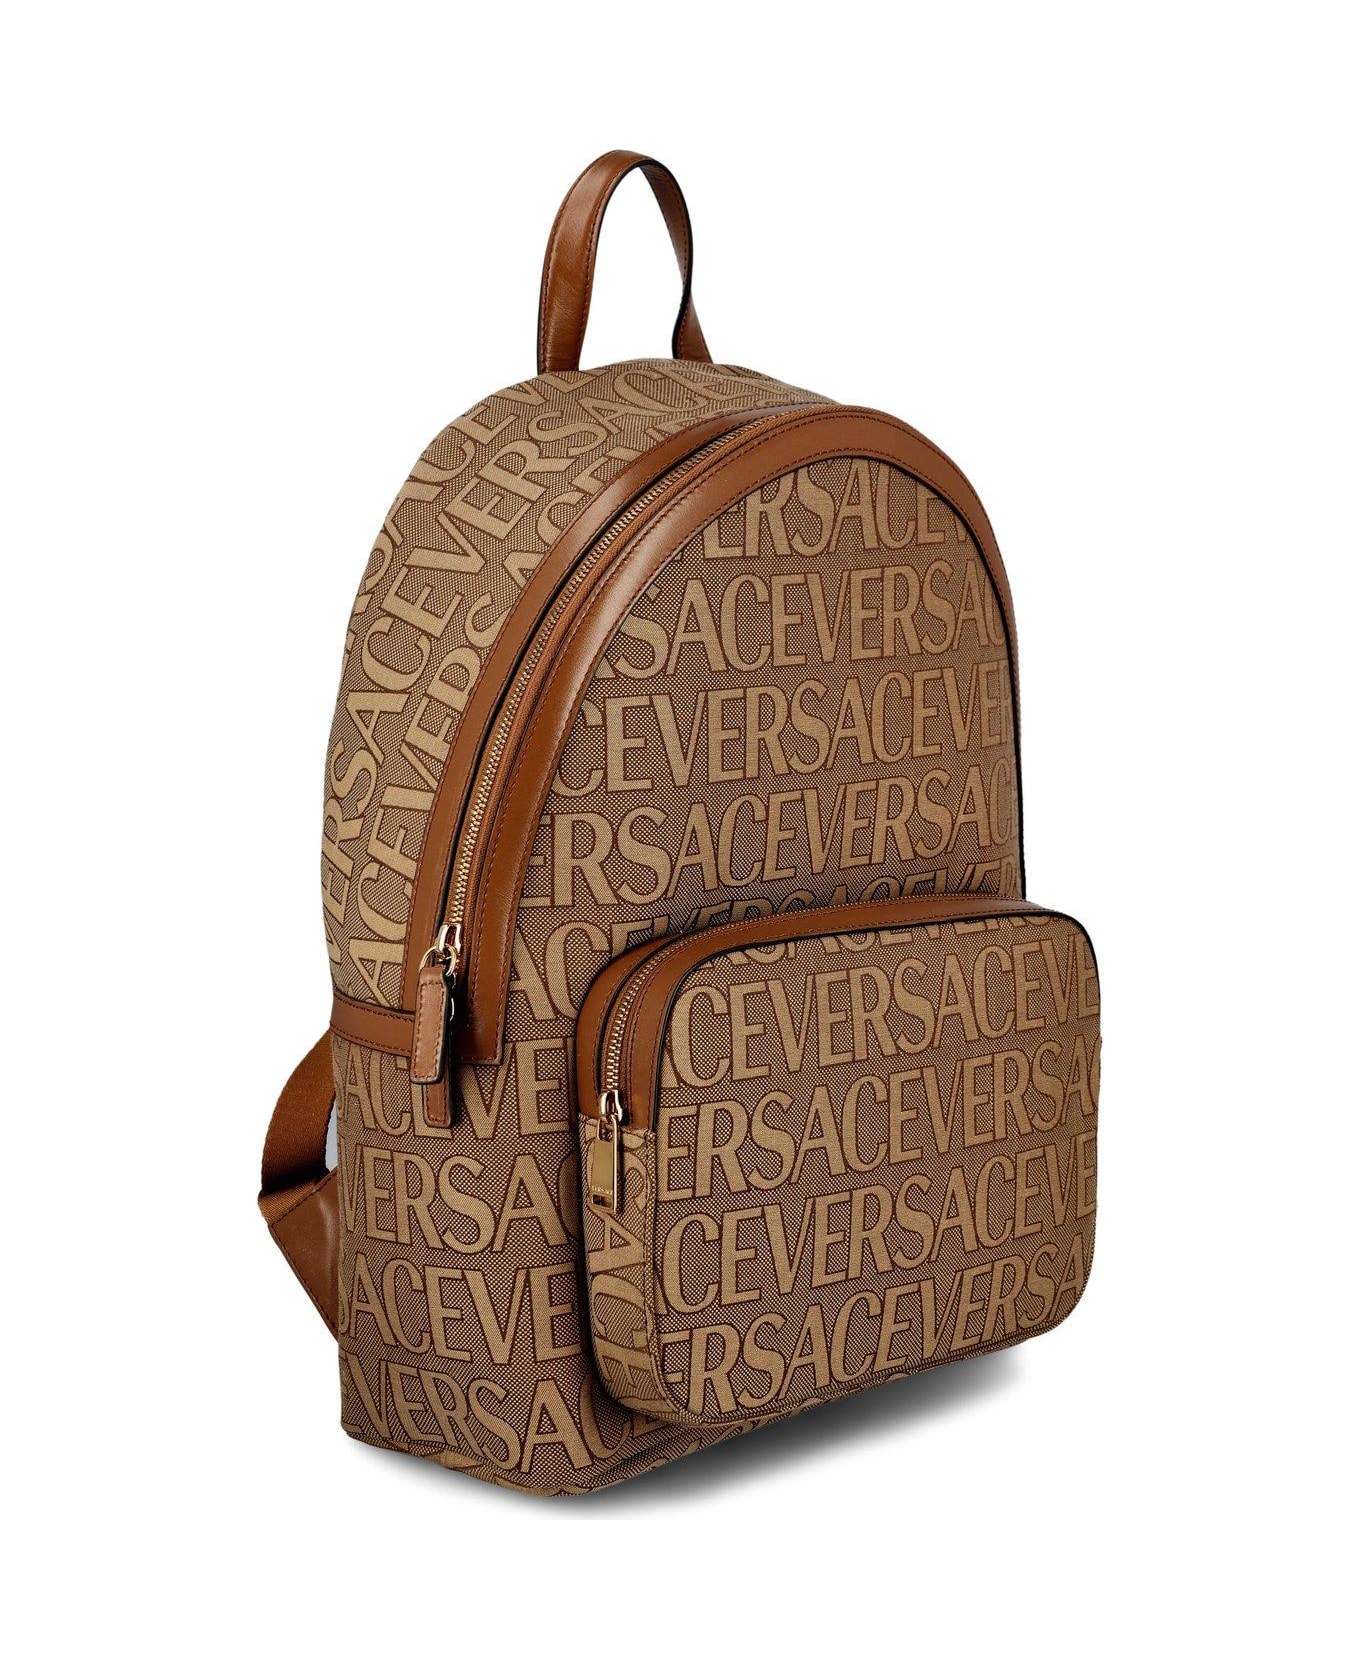 Versace Allover Backpack - BEIGE BROWN バックパック